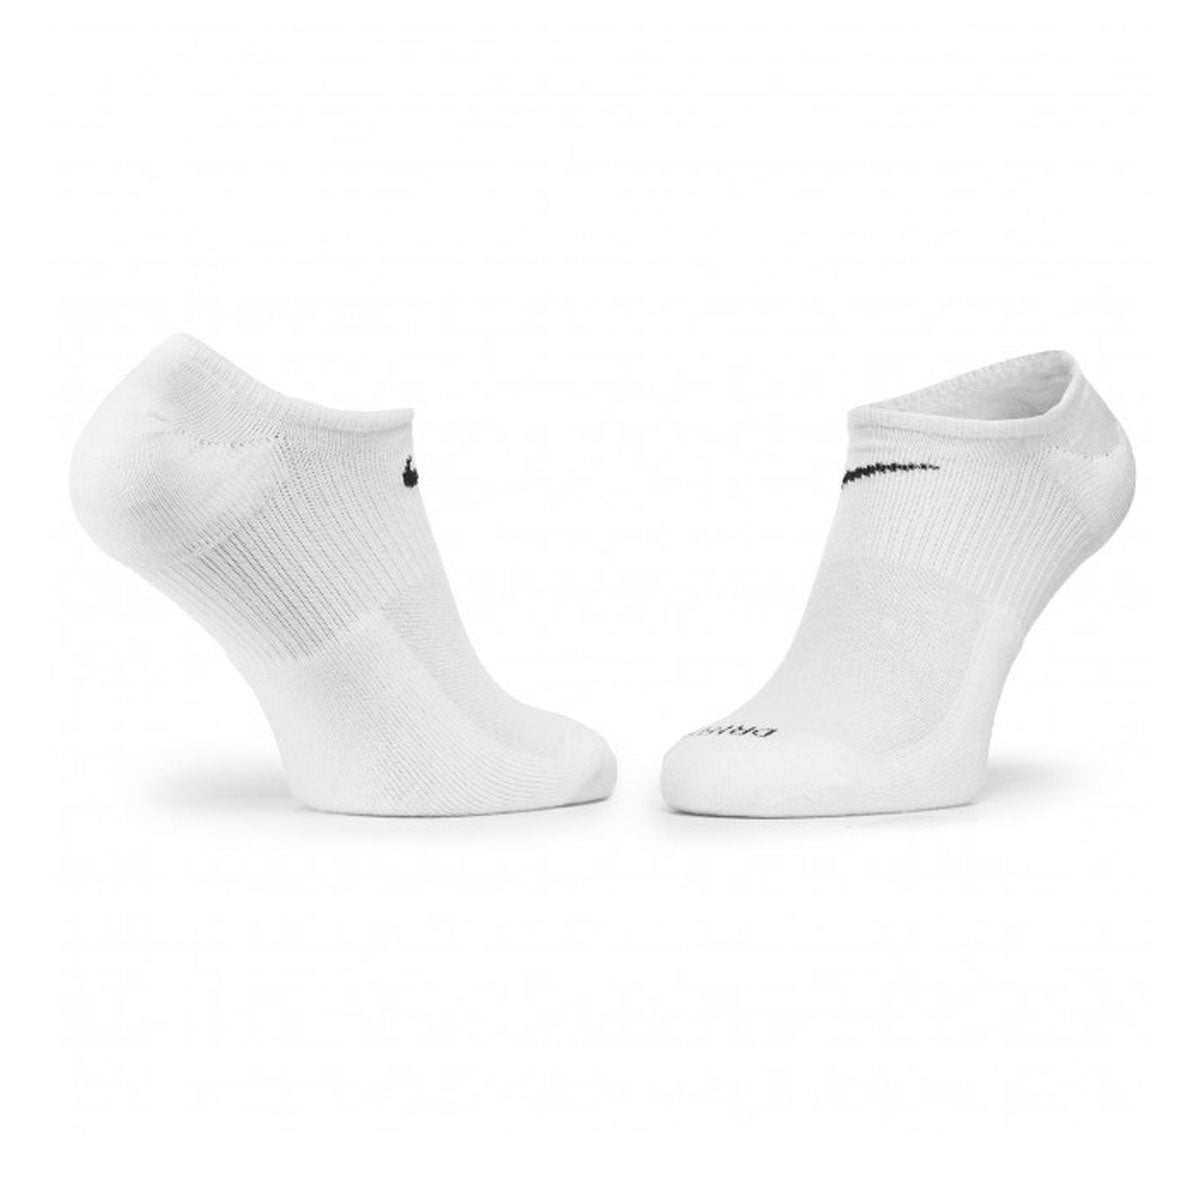 Nike Men's Everyday Plus Cushioned Training No Show Socks White - 3 Pack